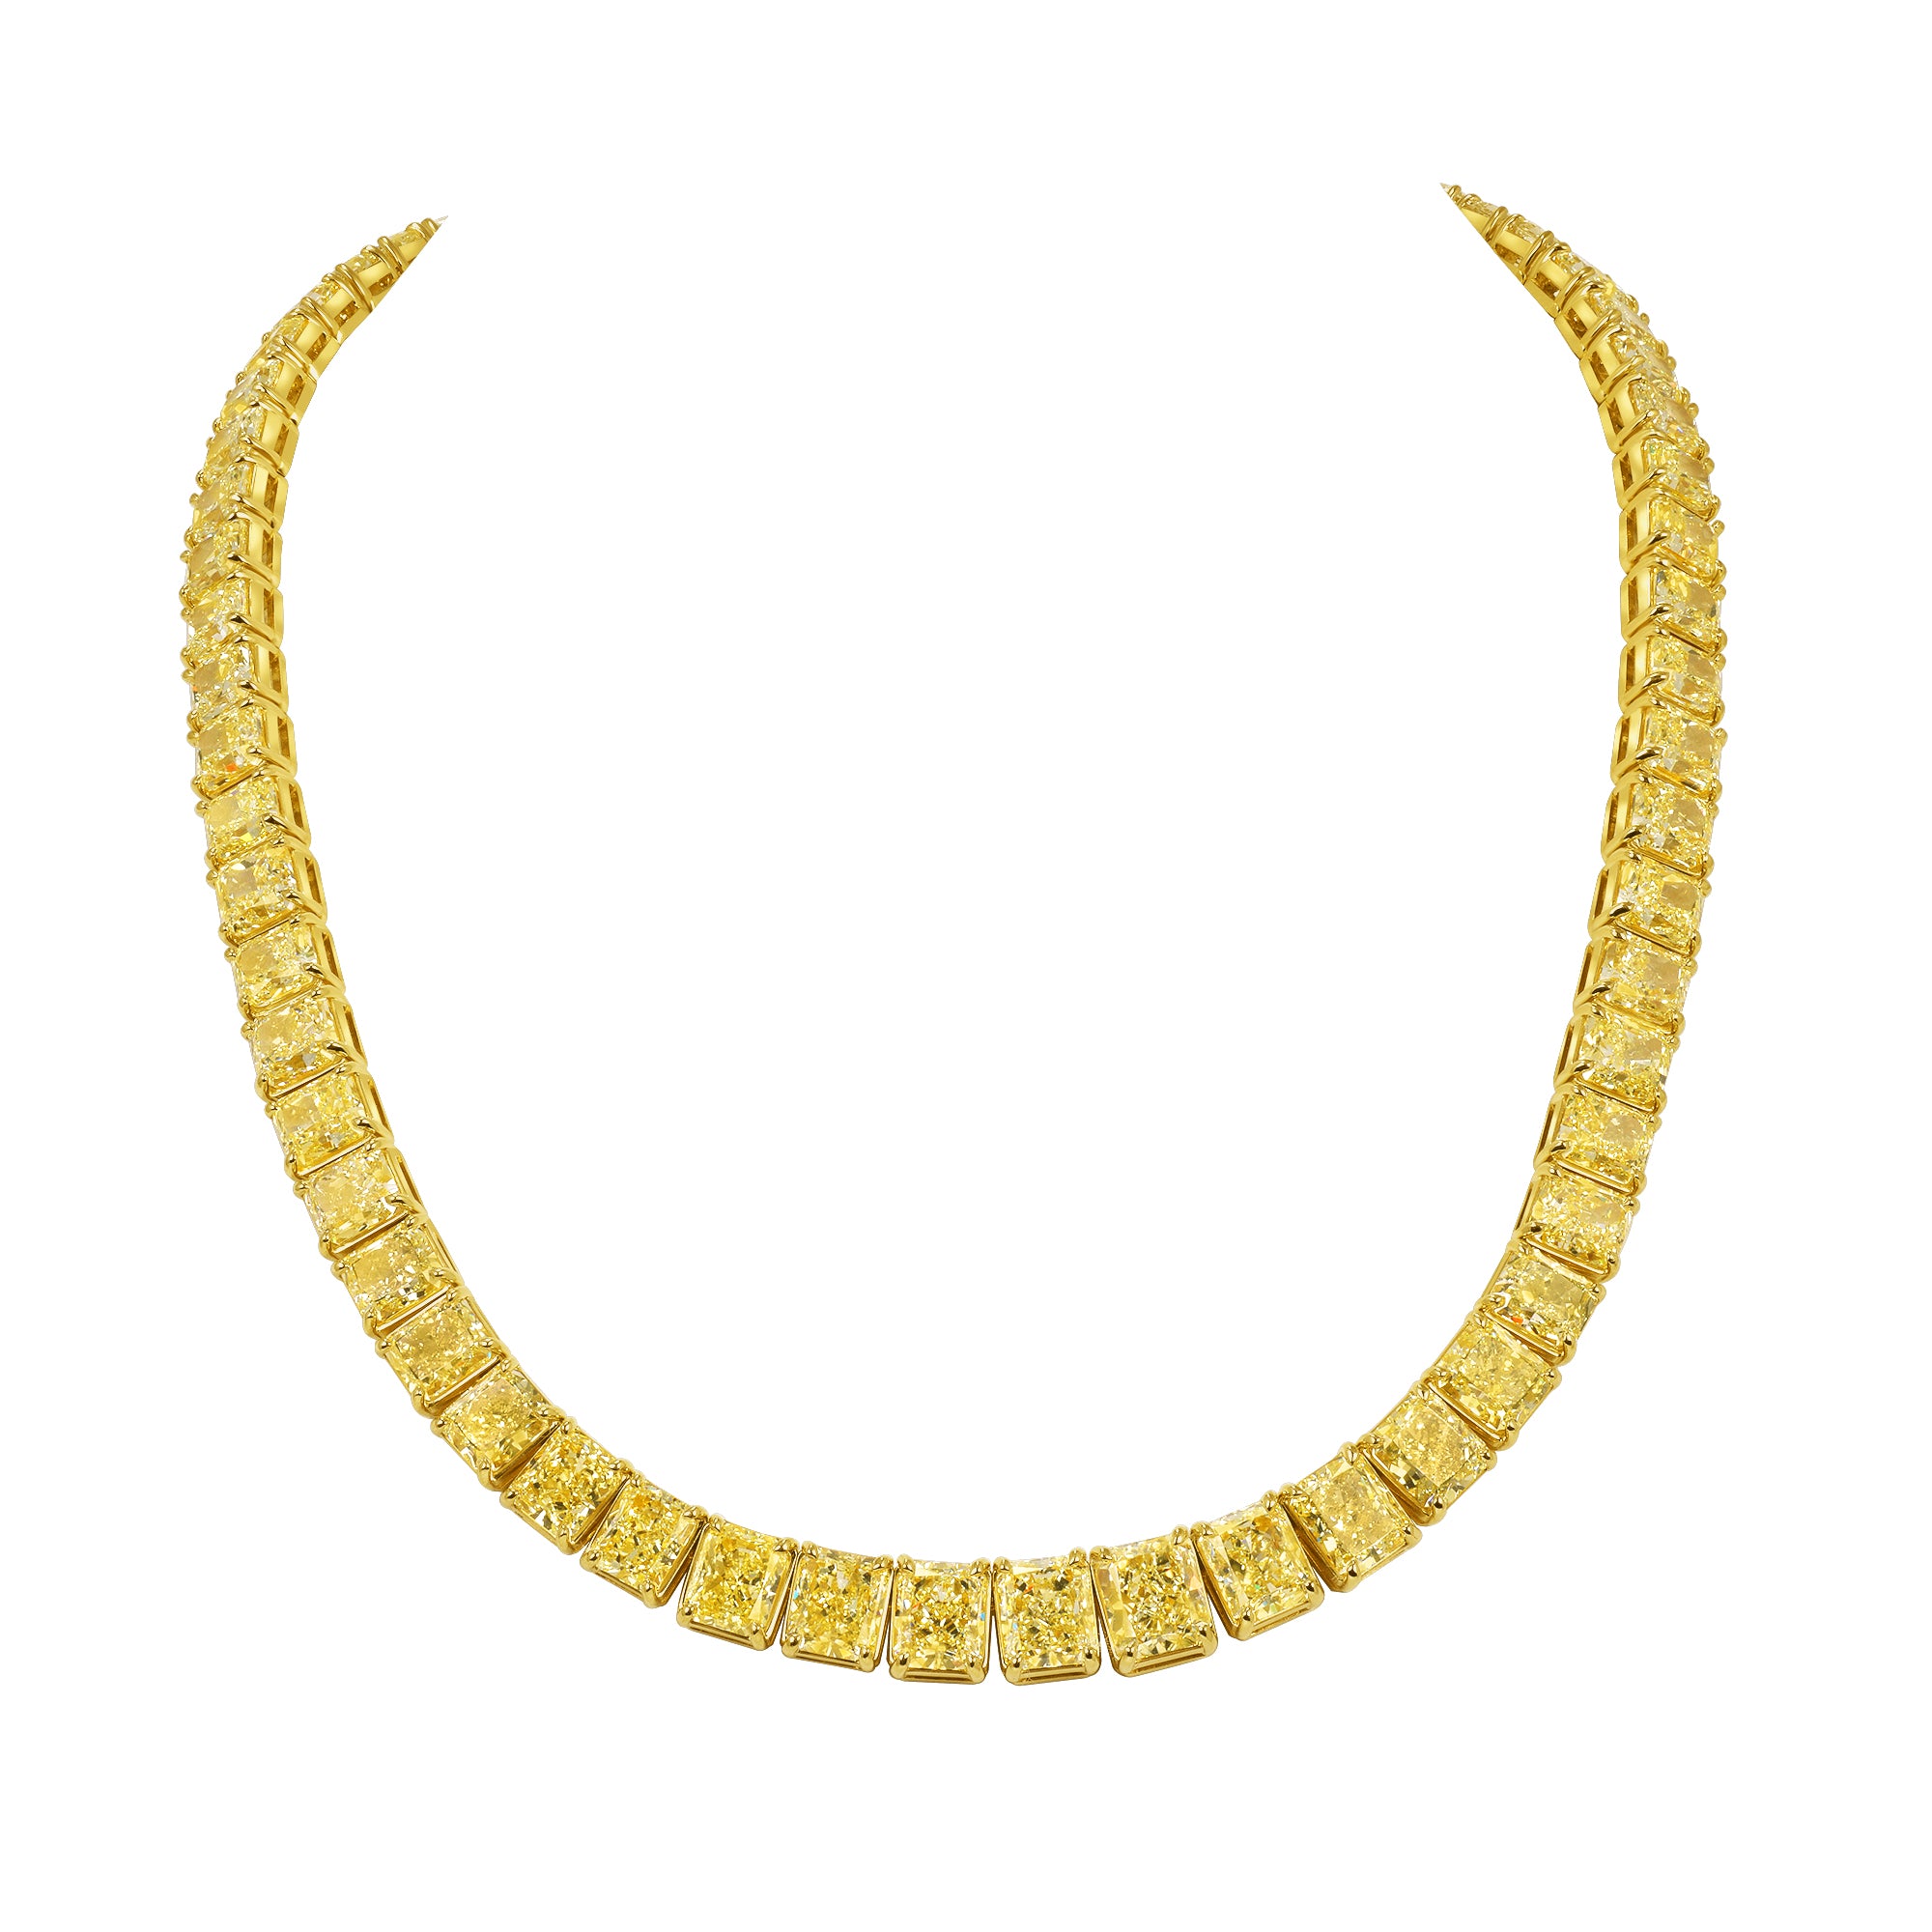 Graduated Radiant Cut Yellow Diamond Tennis Necklace in 18 Karat Yellow Gold